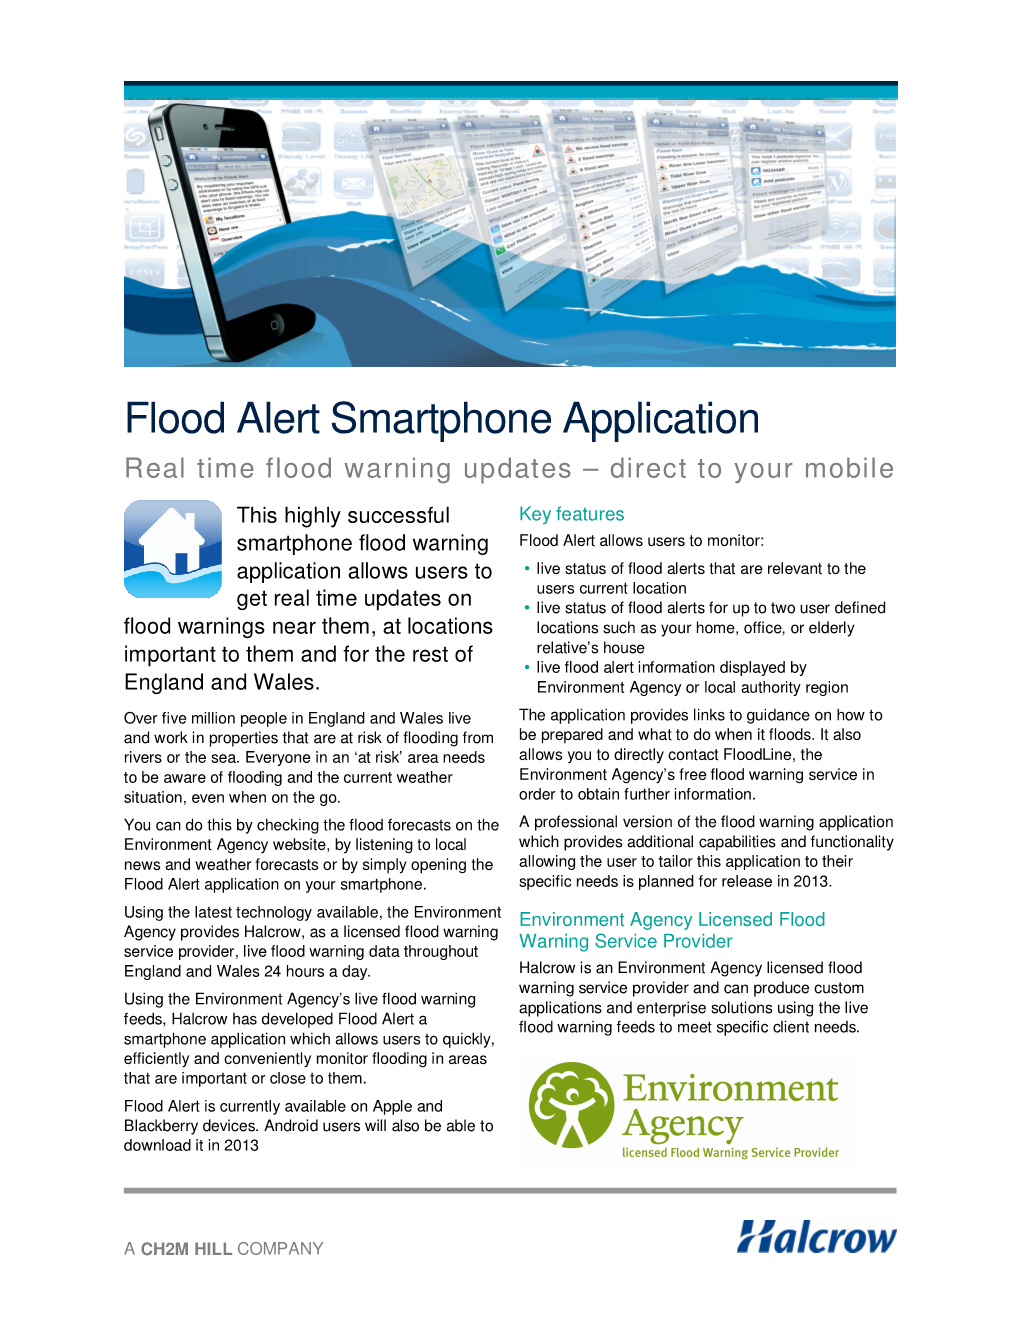 Flood Alert Smartphone Application Real Time Flood Warning Updates – Direct to Your Mobile